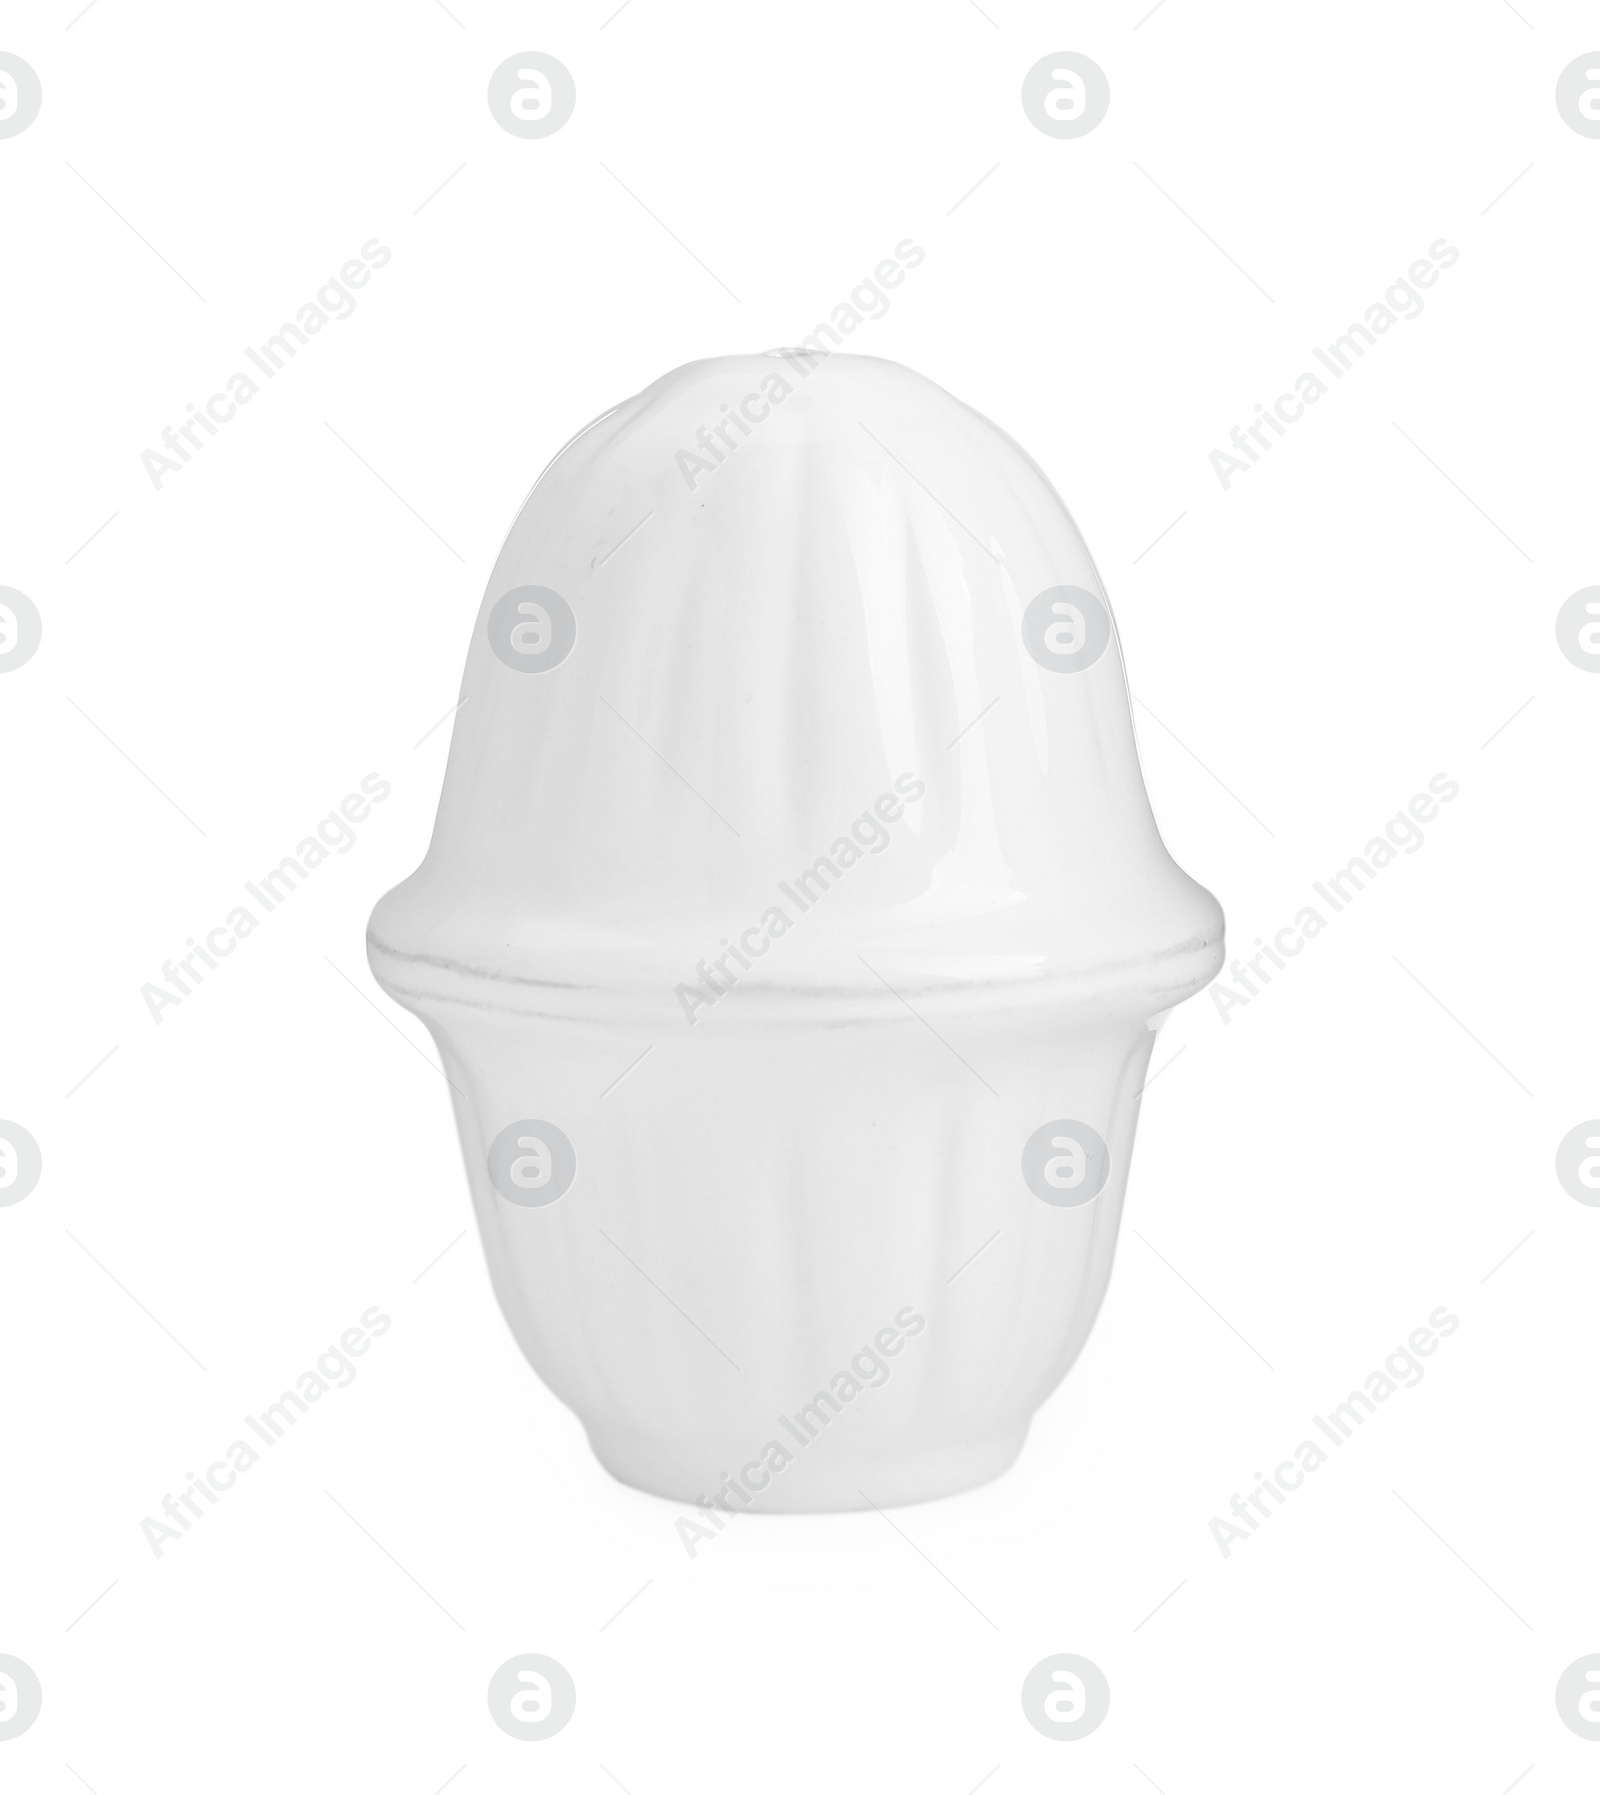 Photo of One ceramic spice shaker isolated on white